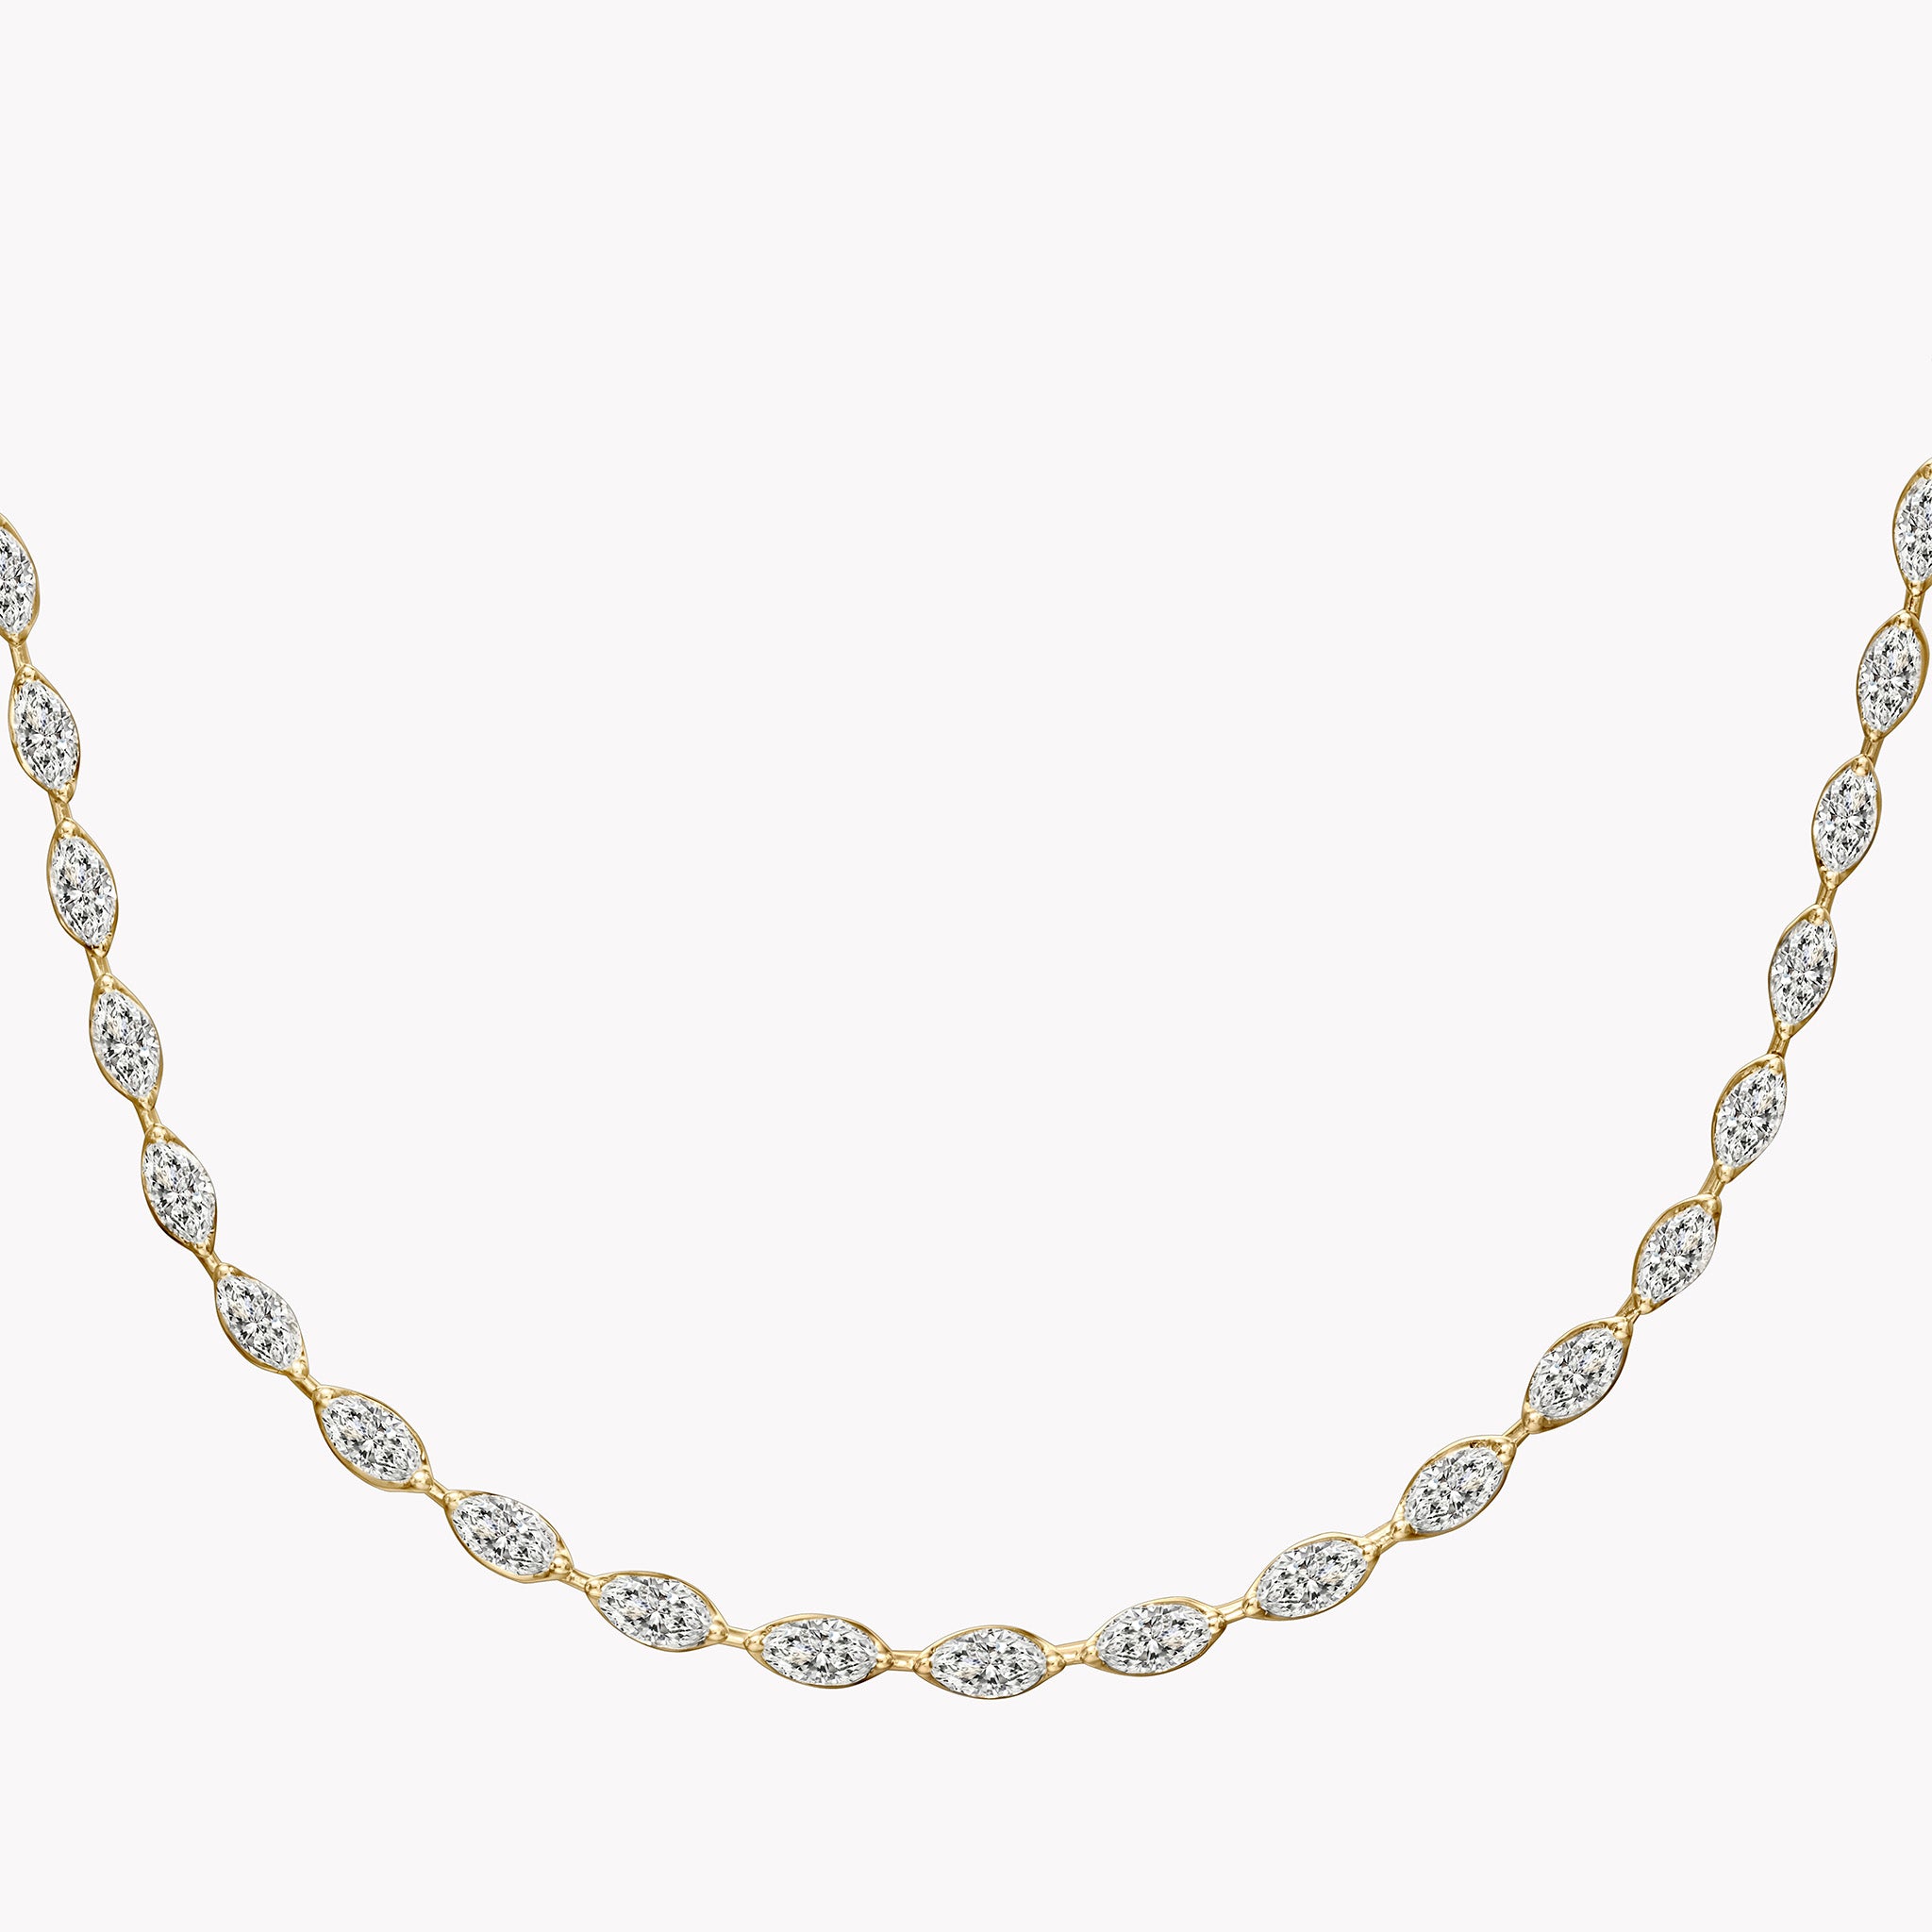 The Full Elle Diamond Necklace